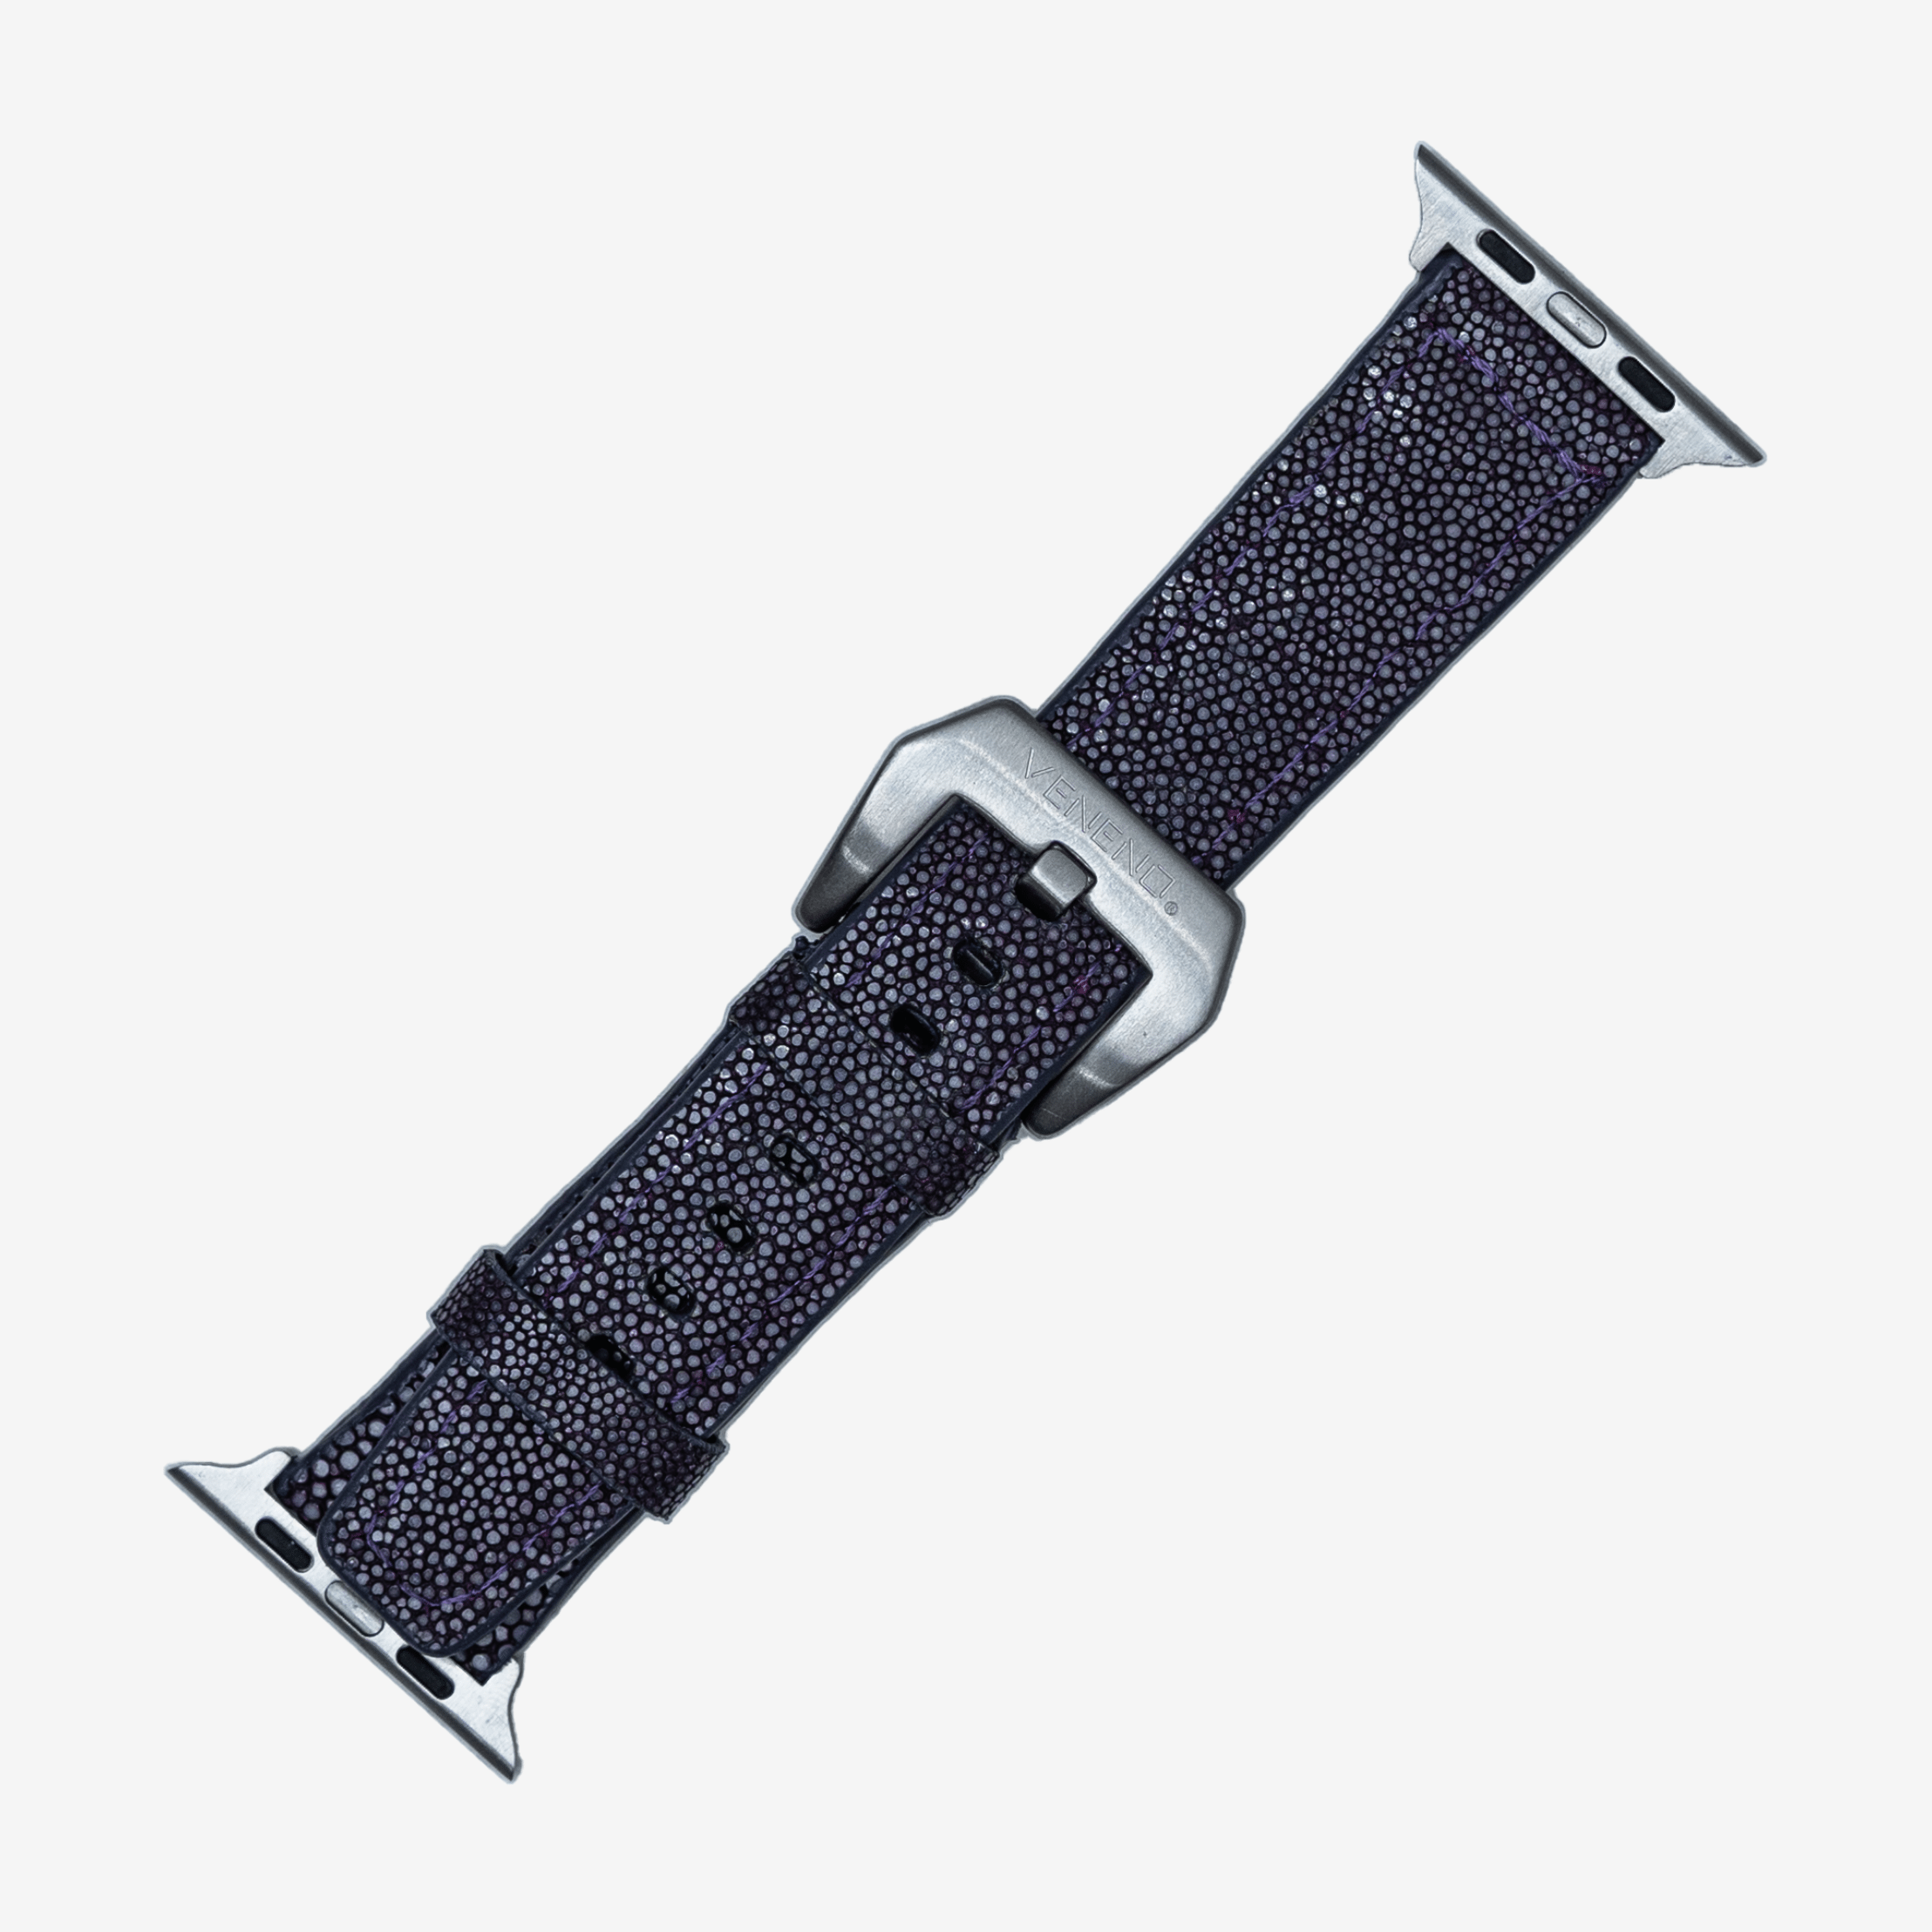 Veneno "Apple Watch Straps 38/40/41 mm" Stingray Silver Violeta